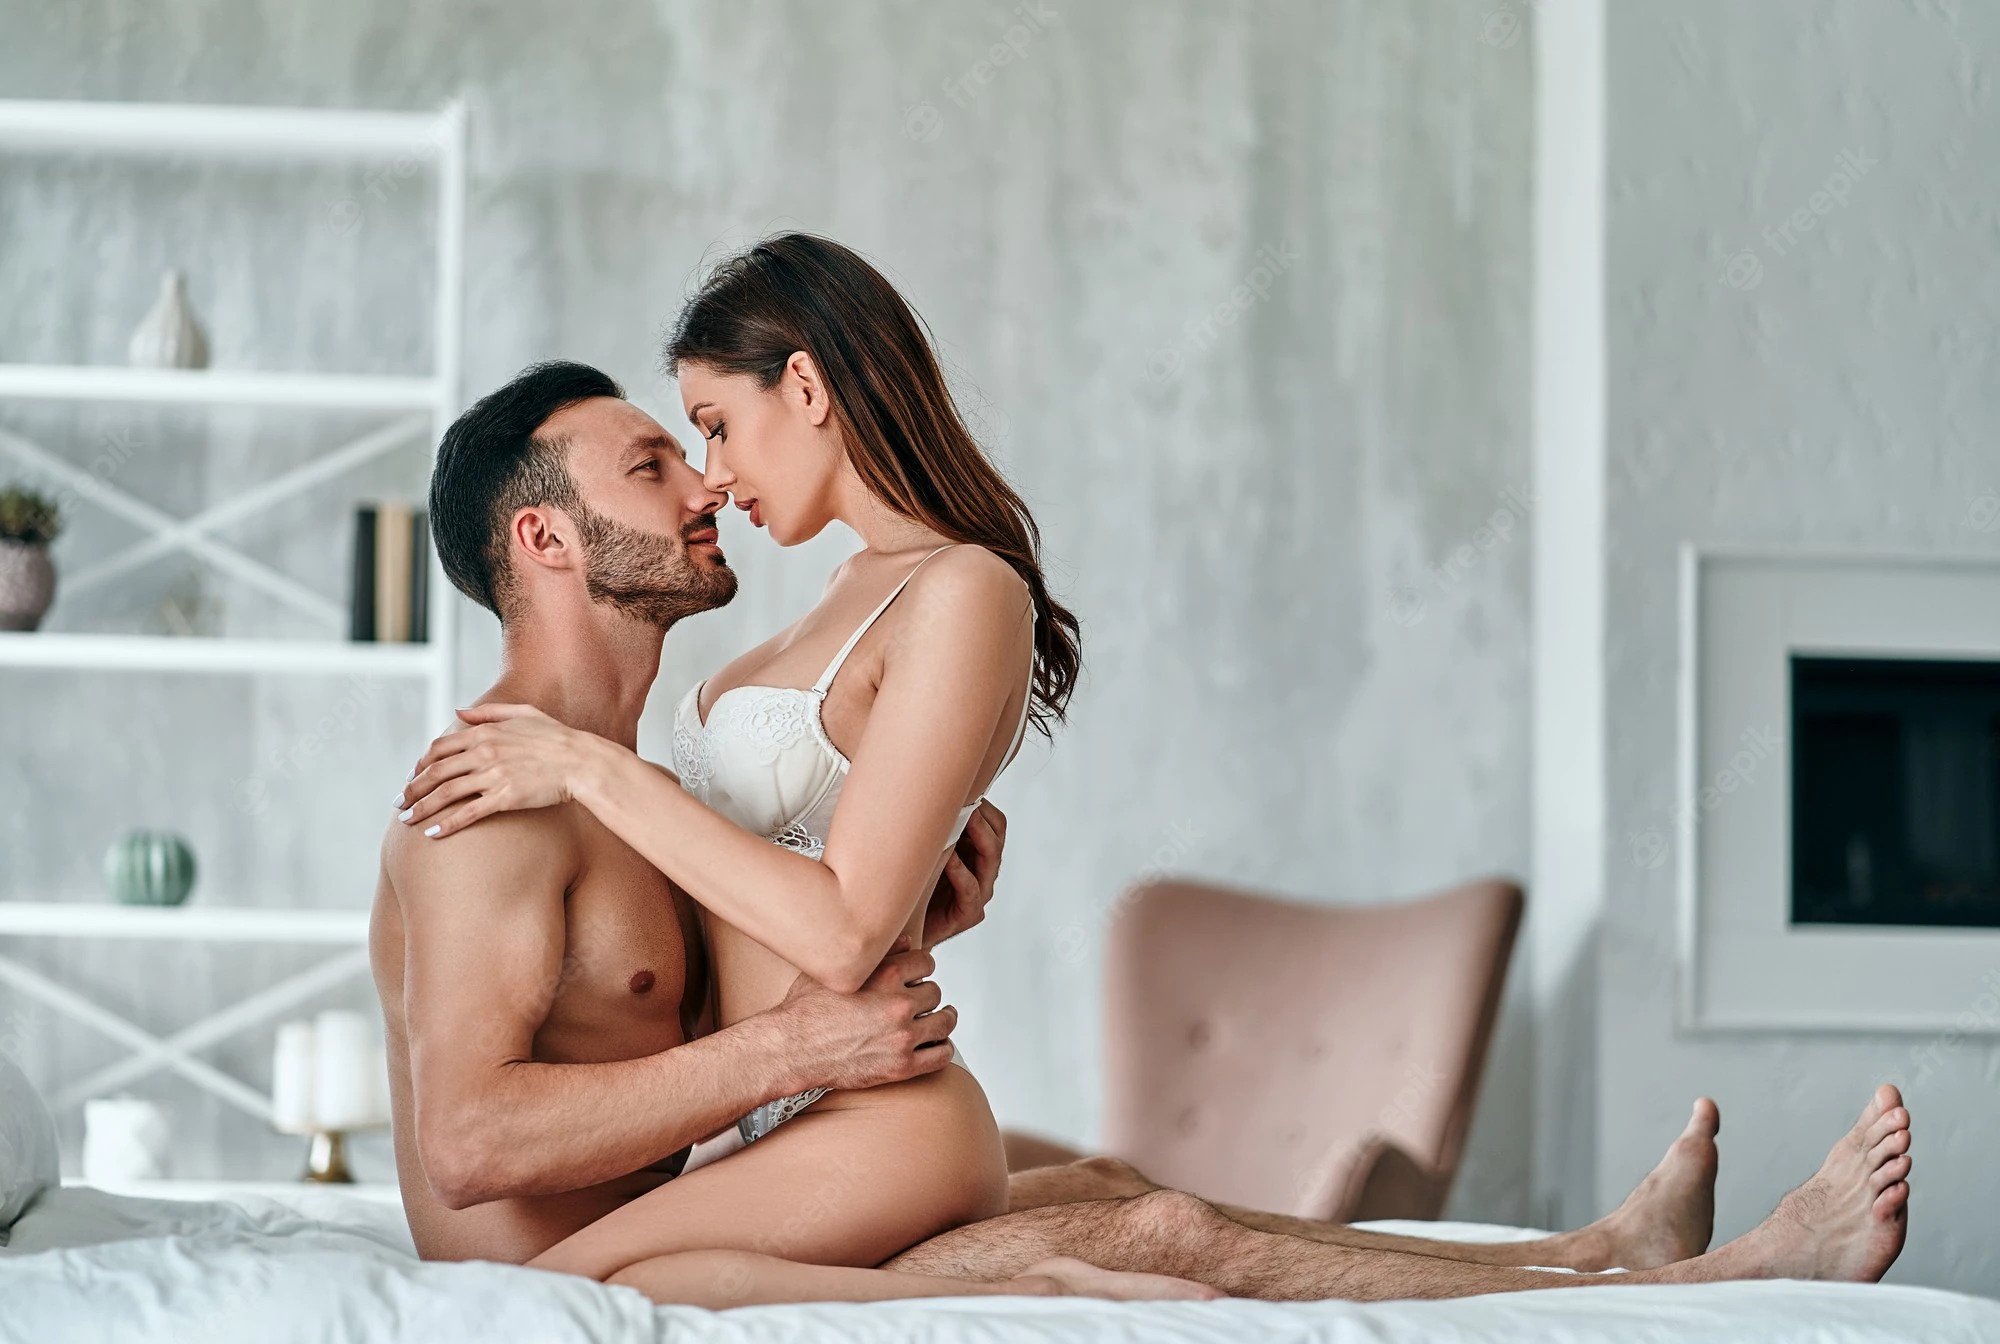 Romenticsex C Om - Top 2 Best Sites To Watch Romantic Porn Videos 2022